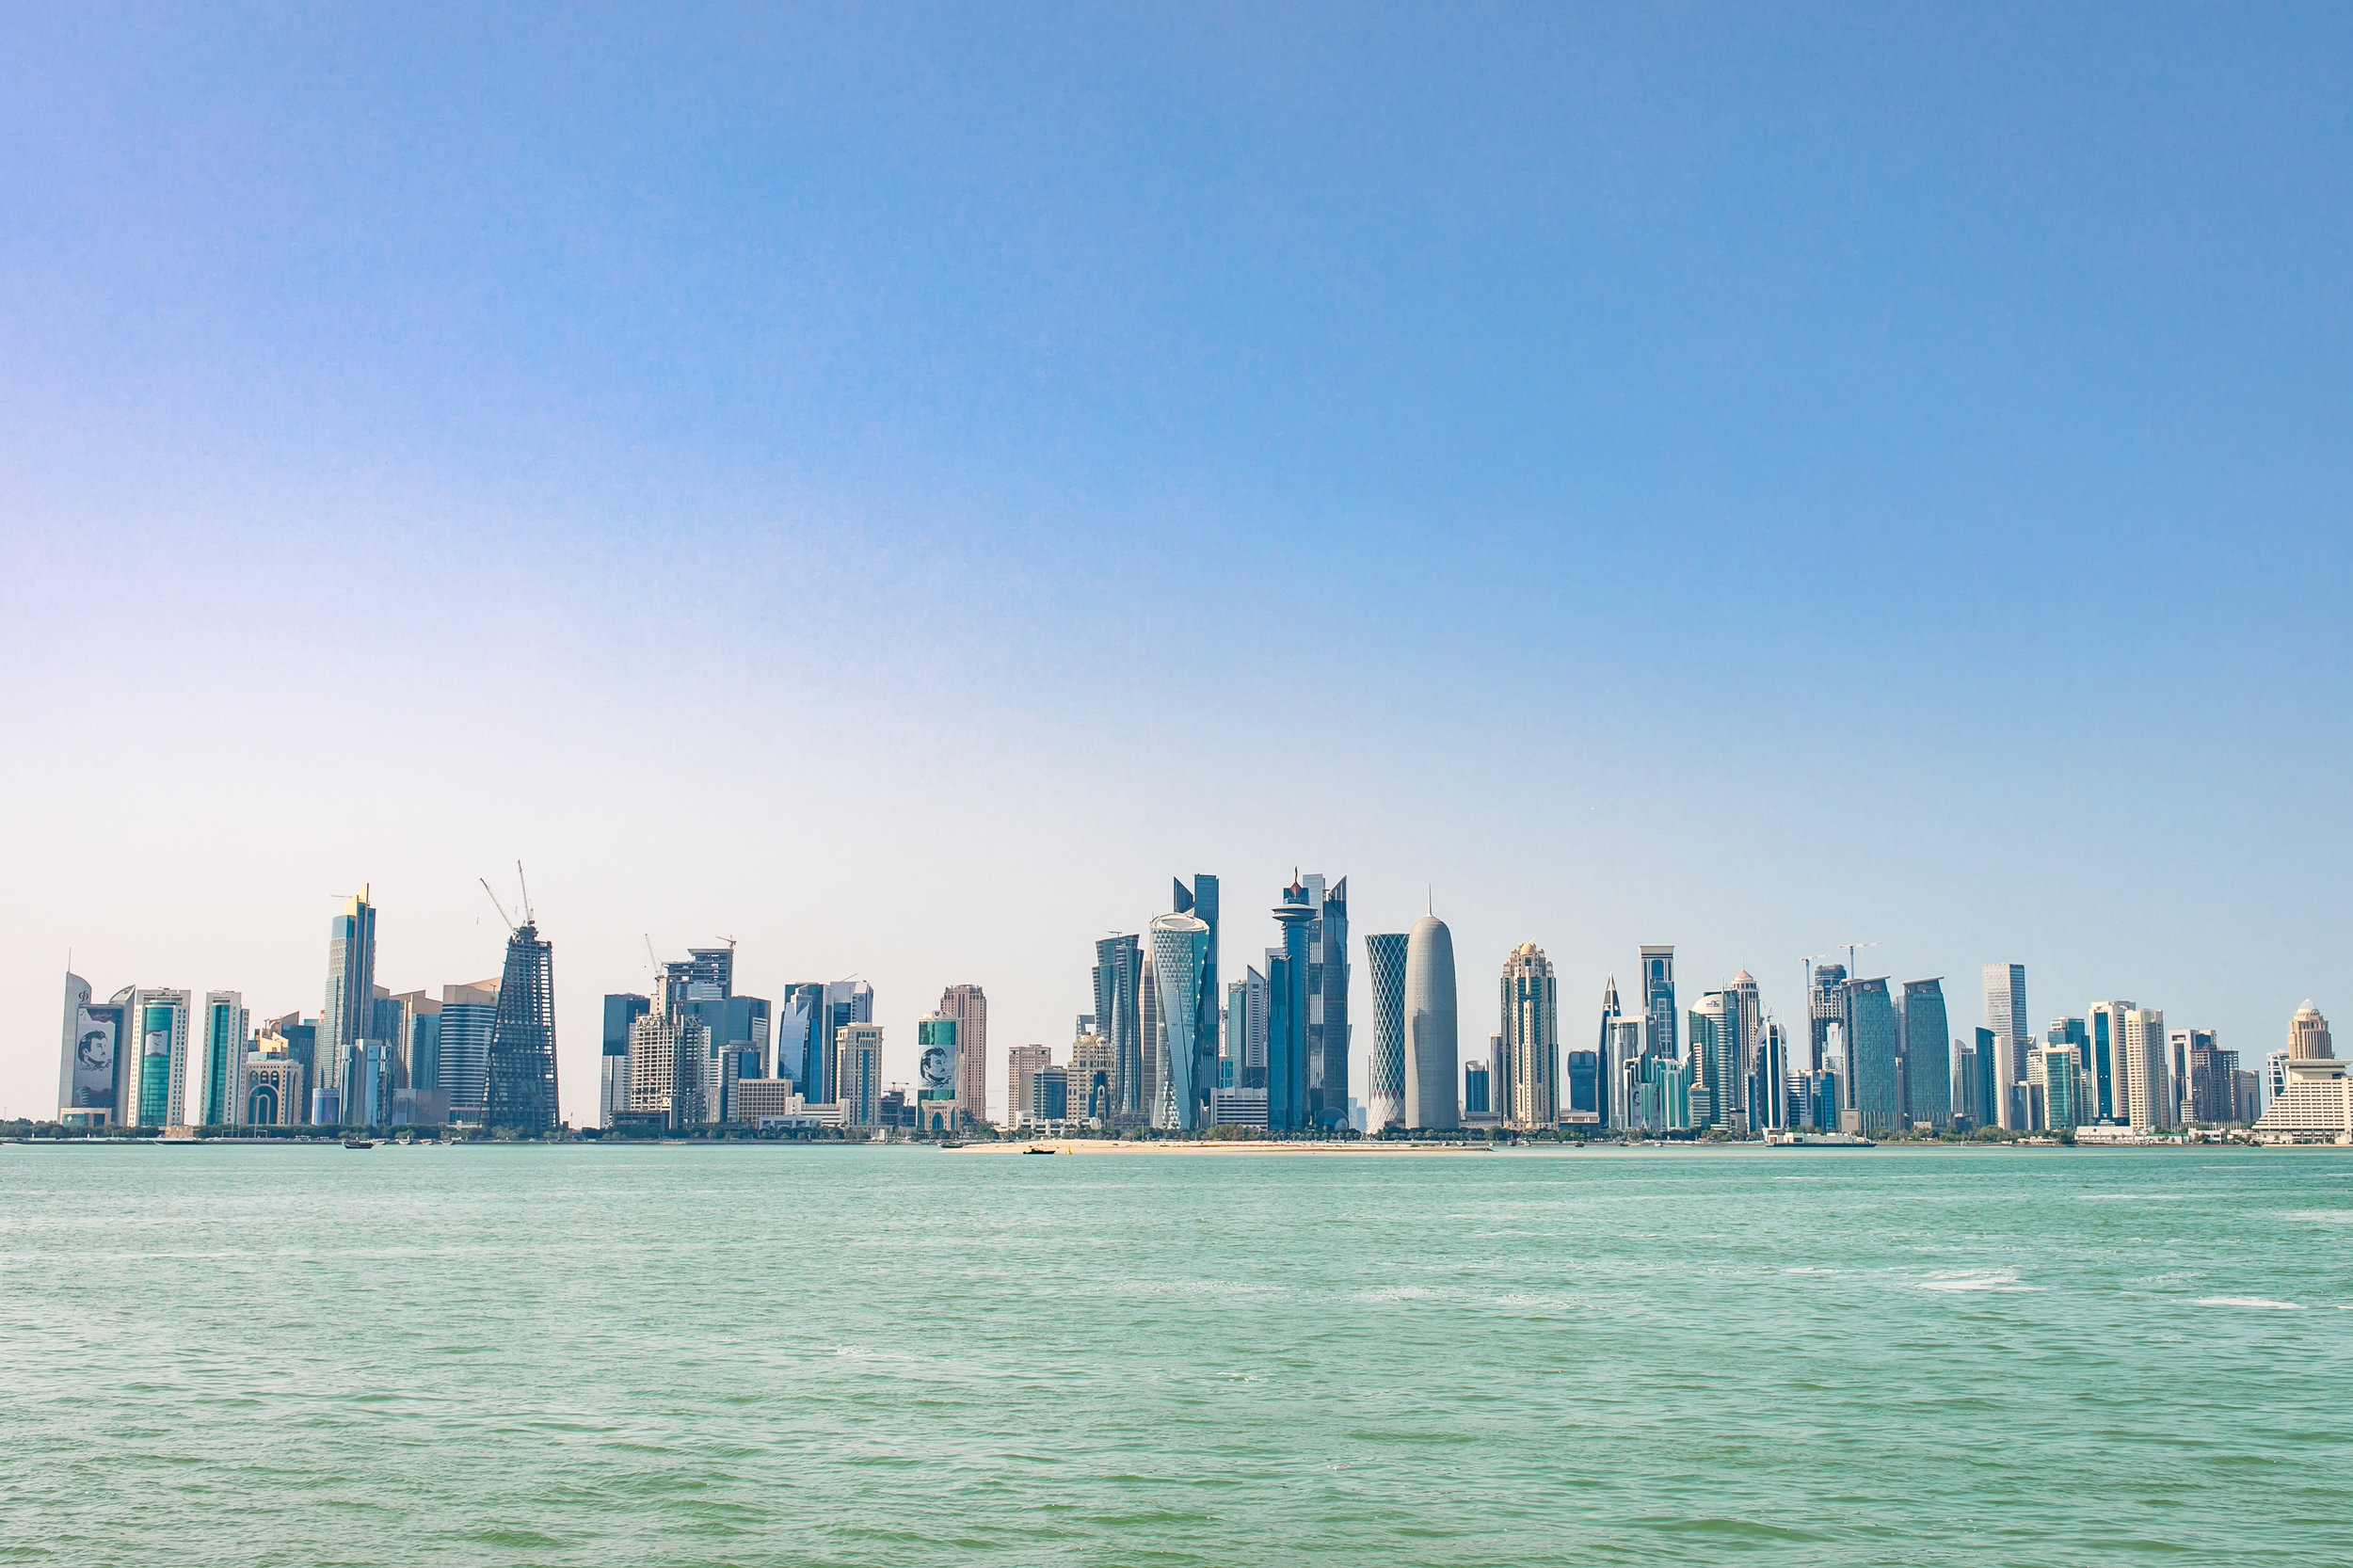  The futuristic skyline of Doha.  